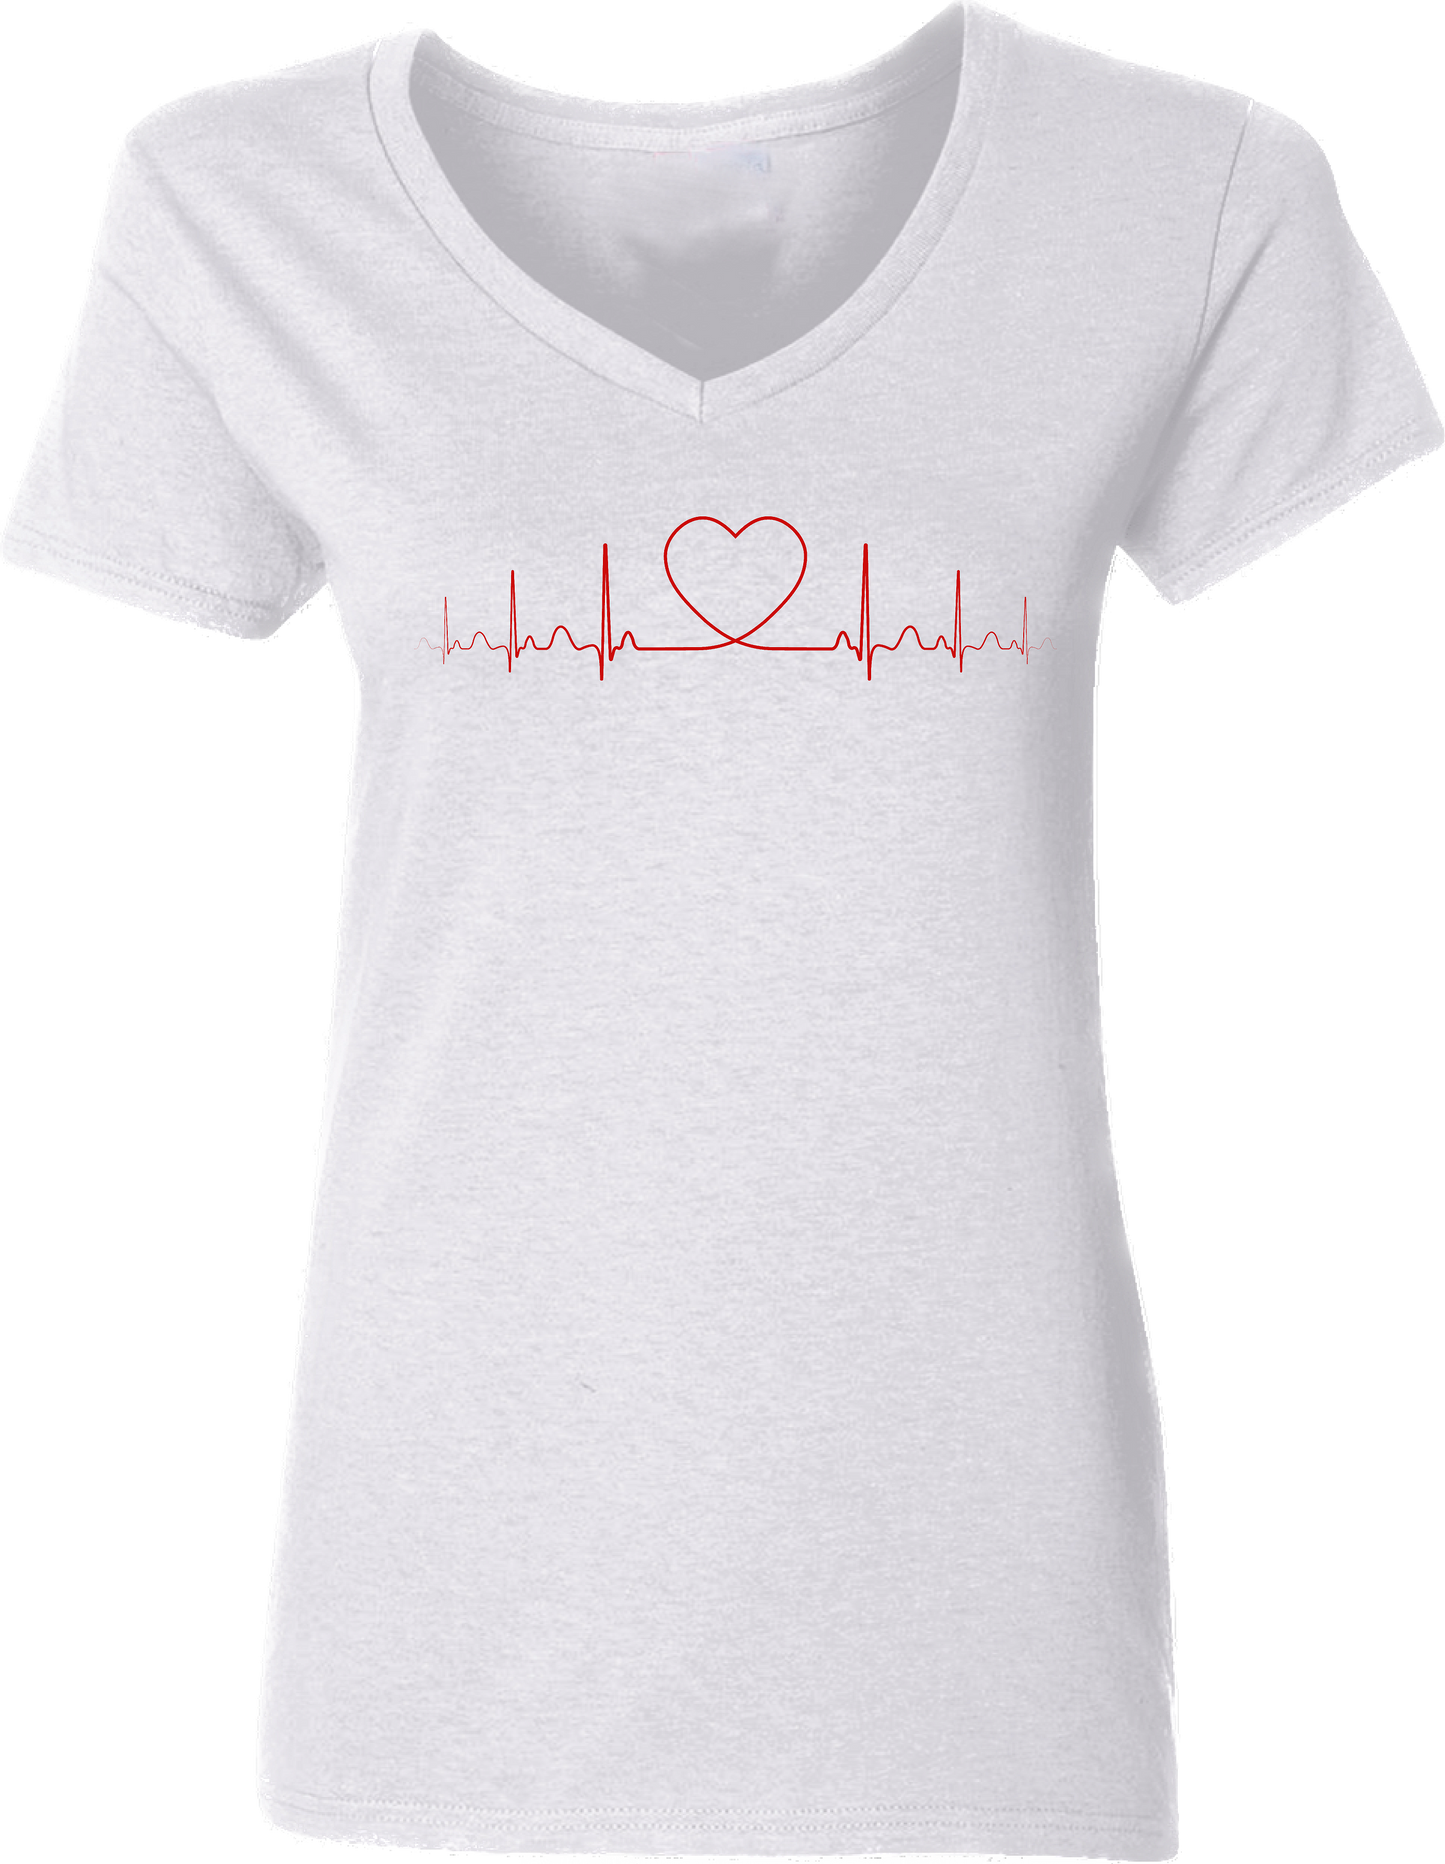 Women’s V-Neck T-shirt with Heartbeat Rhythm